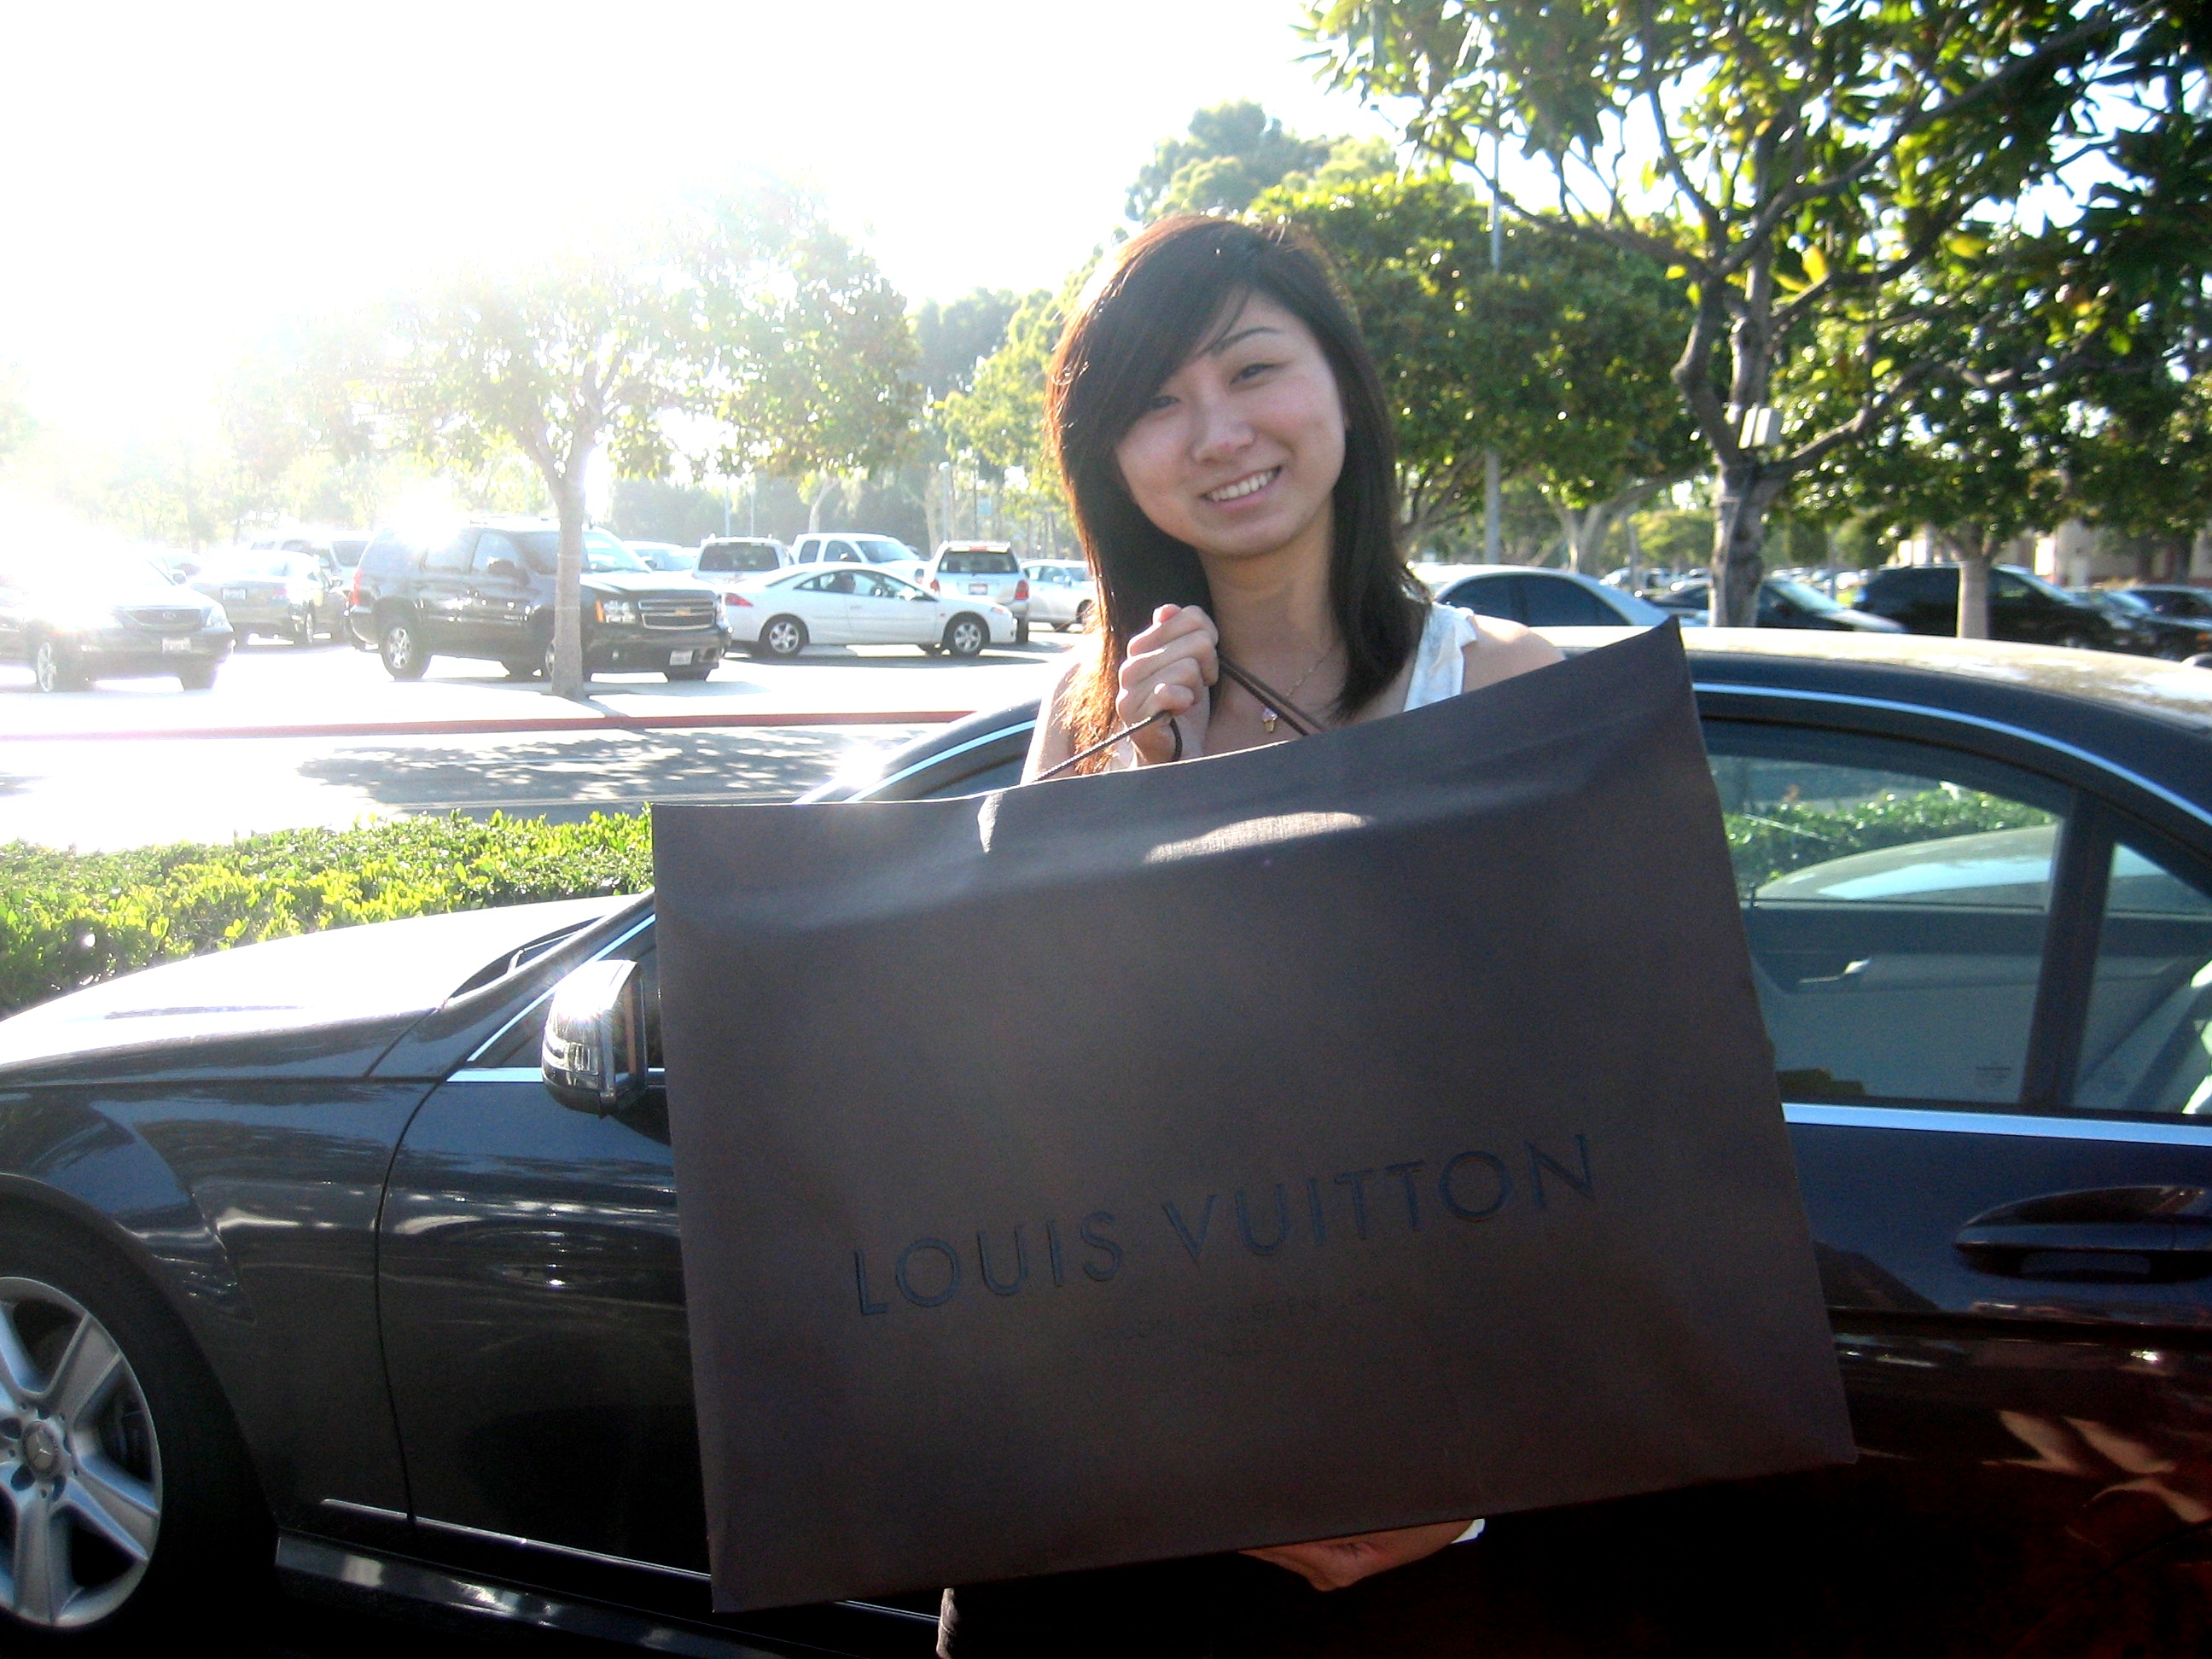 Louis Vuitton Damier Trevi PM Handbag Shoulder Bag N51997 Brown